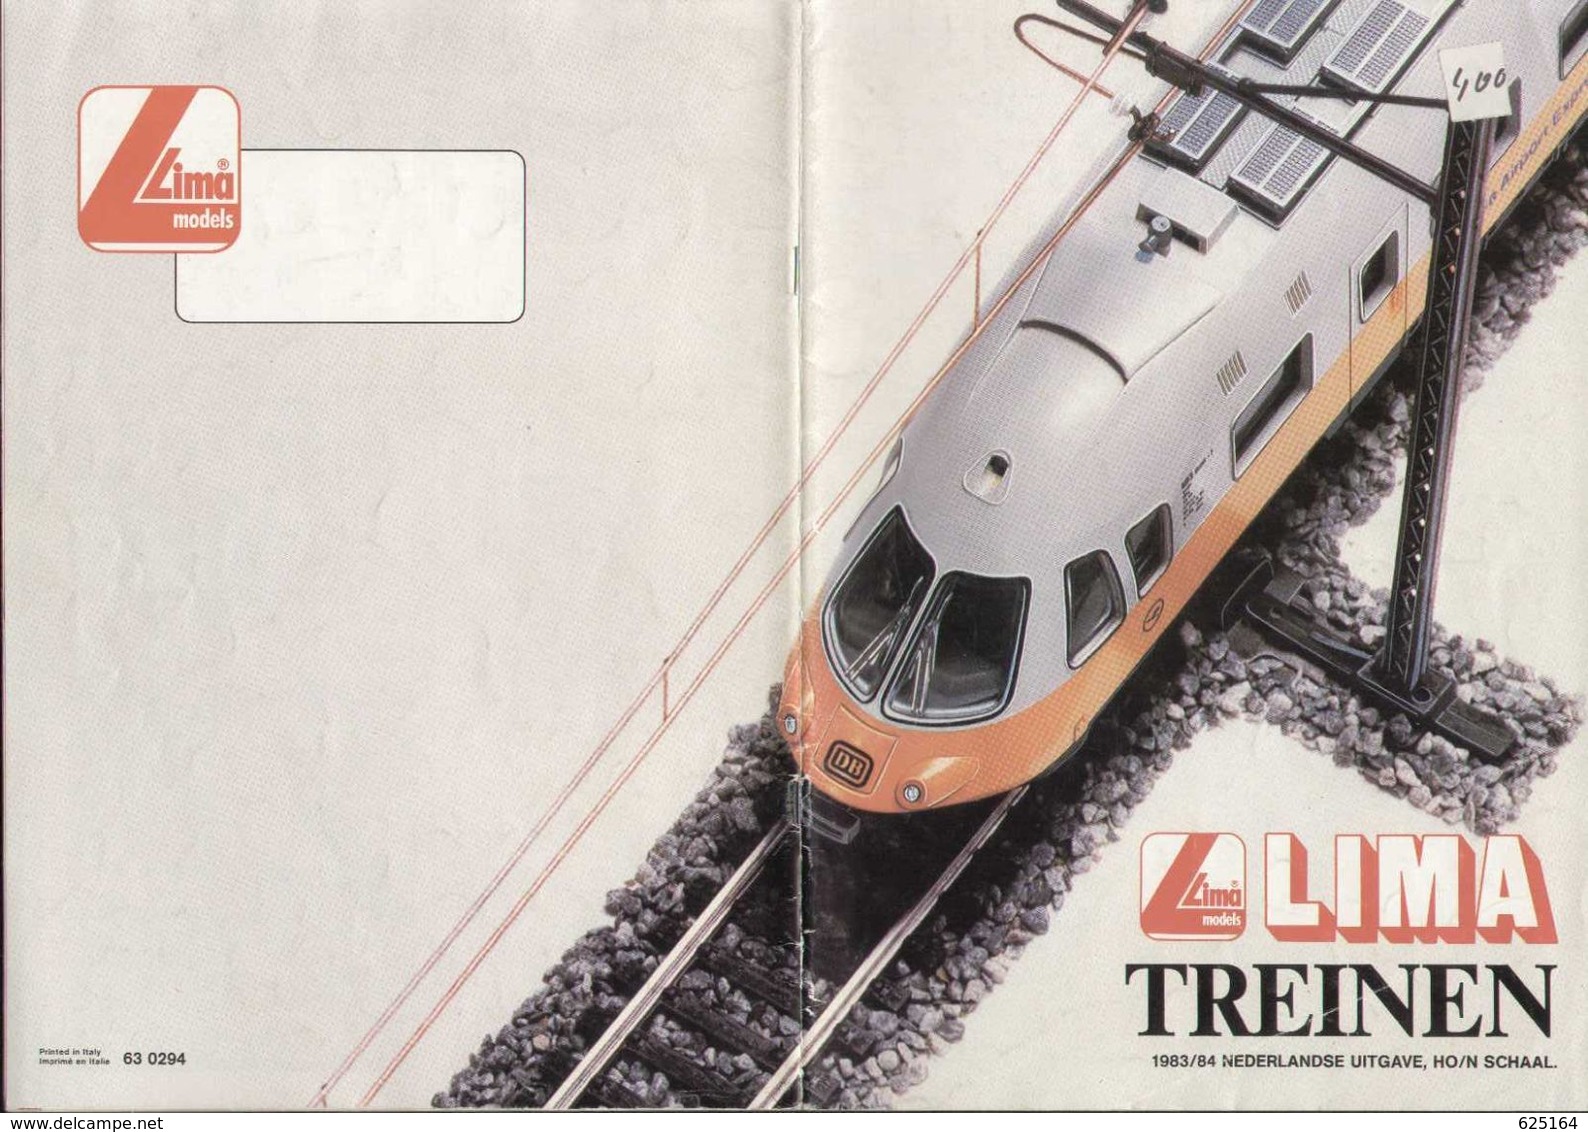 Catalogue LIMA 1983/84 TREINEN Nederlandse Utgave HO / N Schaal. - Dutch